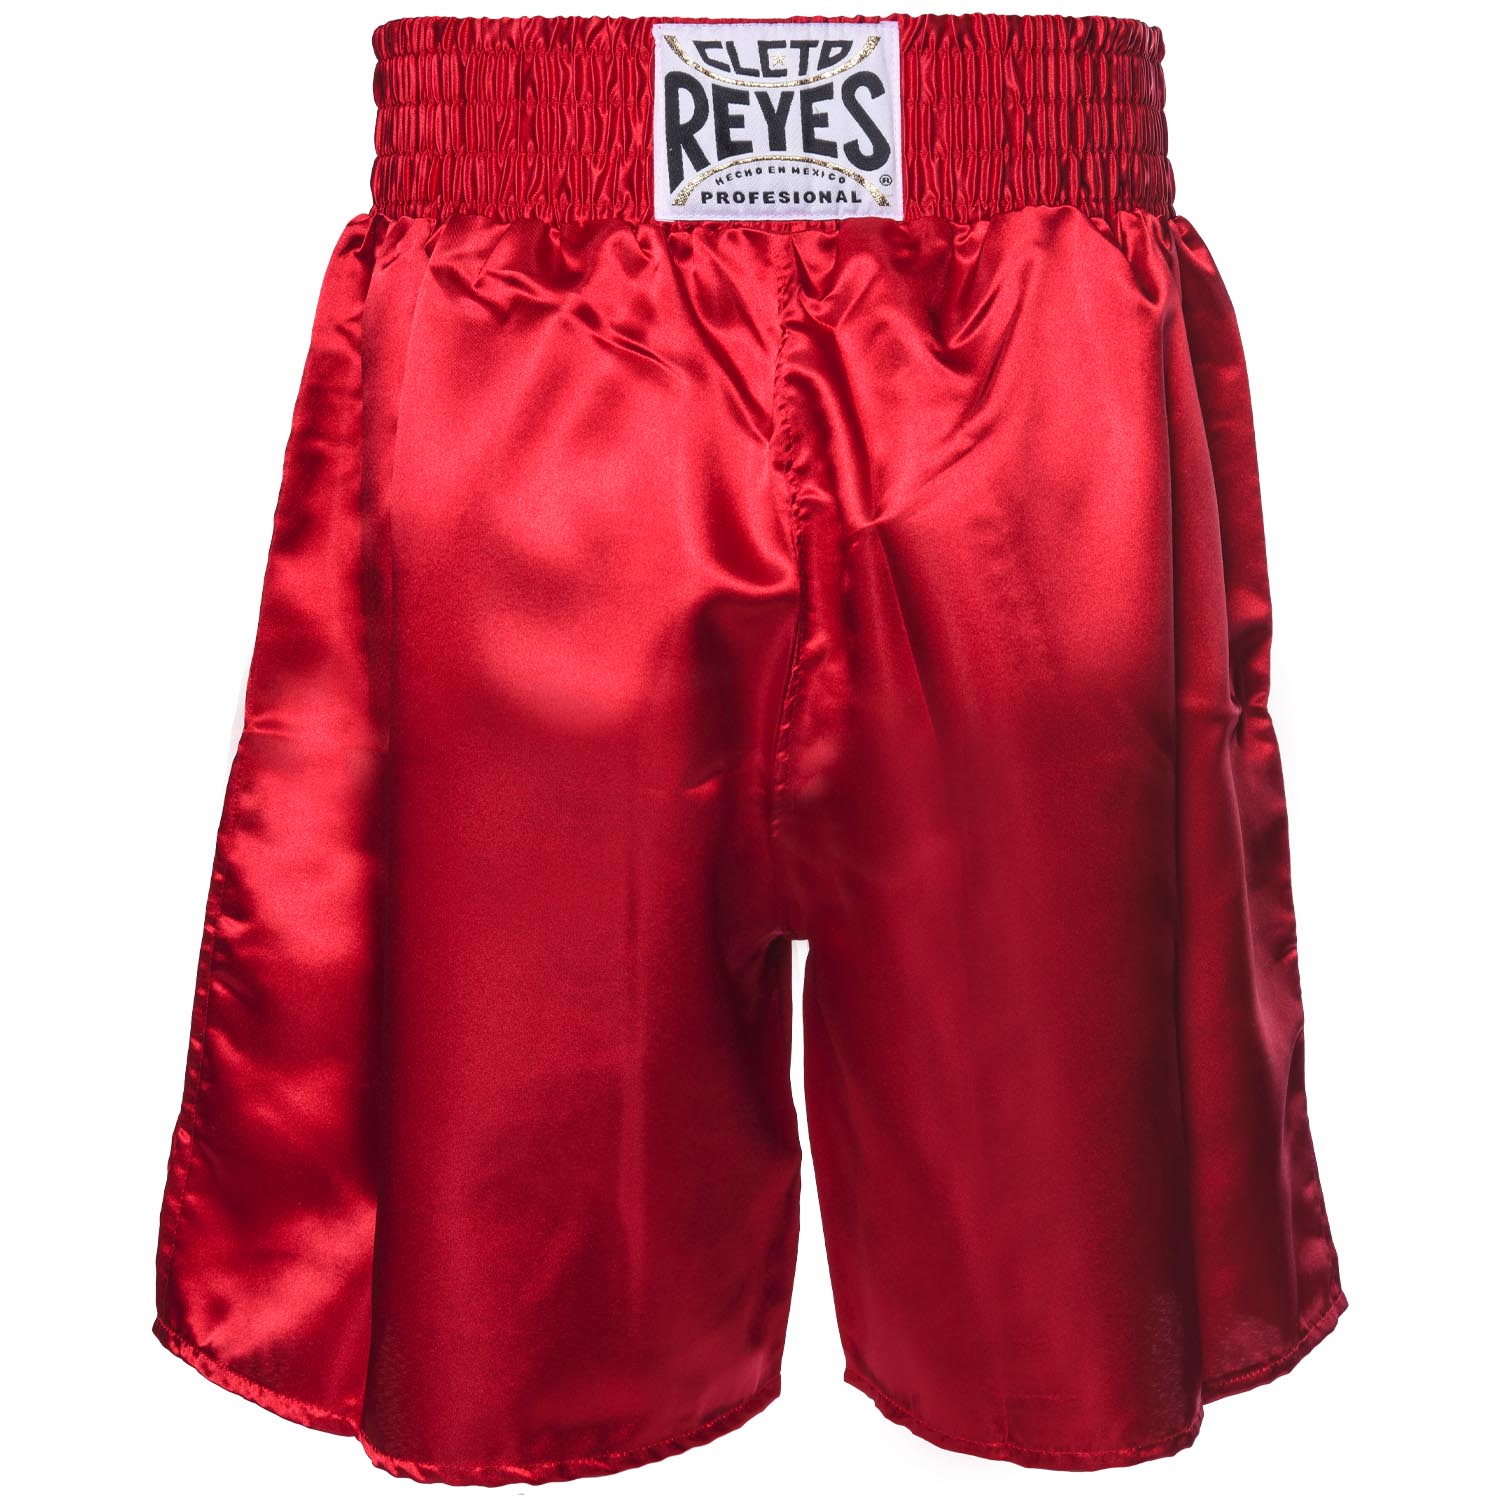 Cleto Reyes Boxhosen, Satin Classic, rot